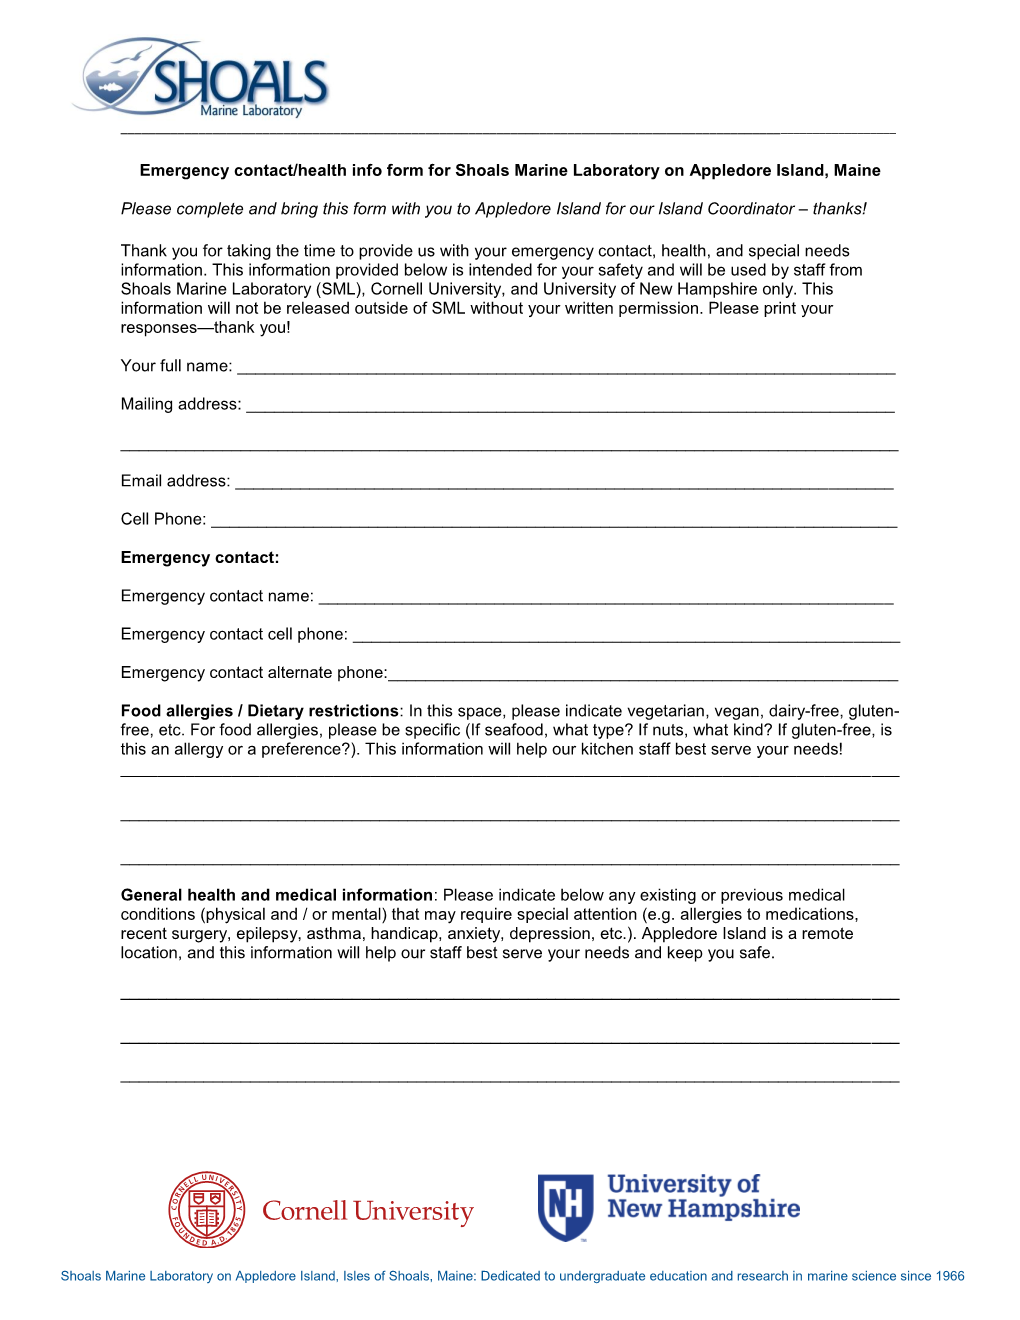 Emergency Contact/Health Info Form for Shoals Marine Laboratory on Appledore Island, Maine